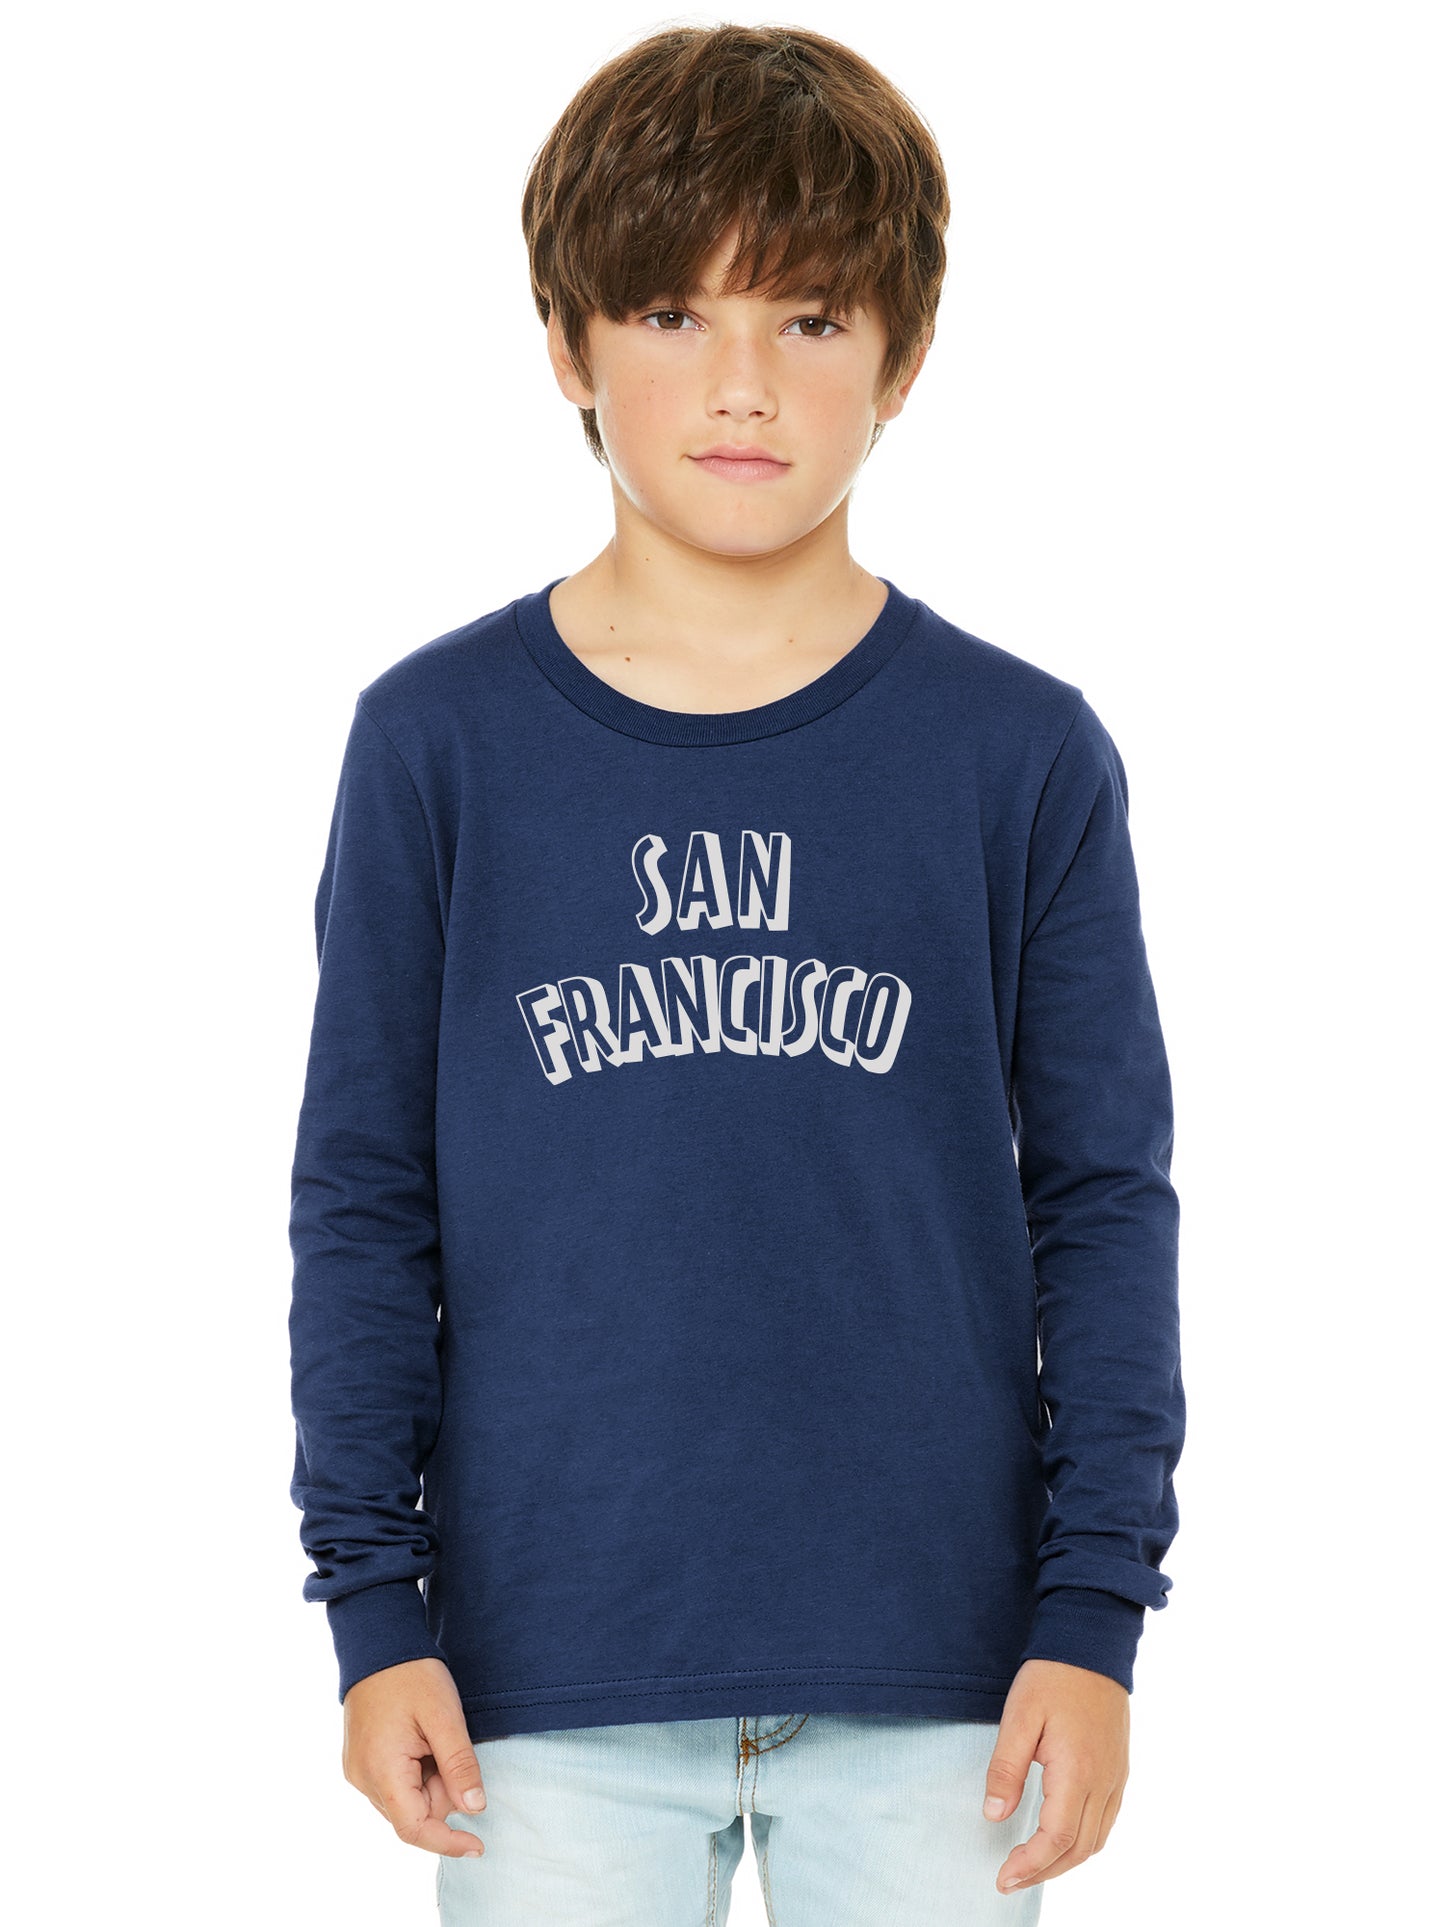 Daxton Youth Long Sleeve San Francisco Basic Tshirt